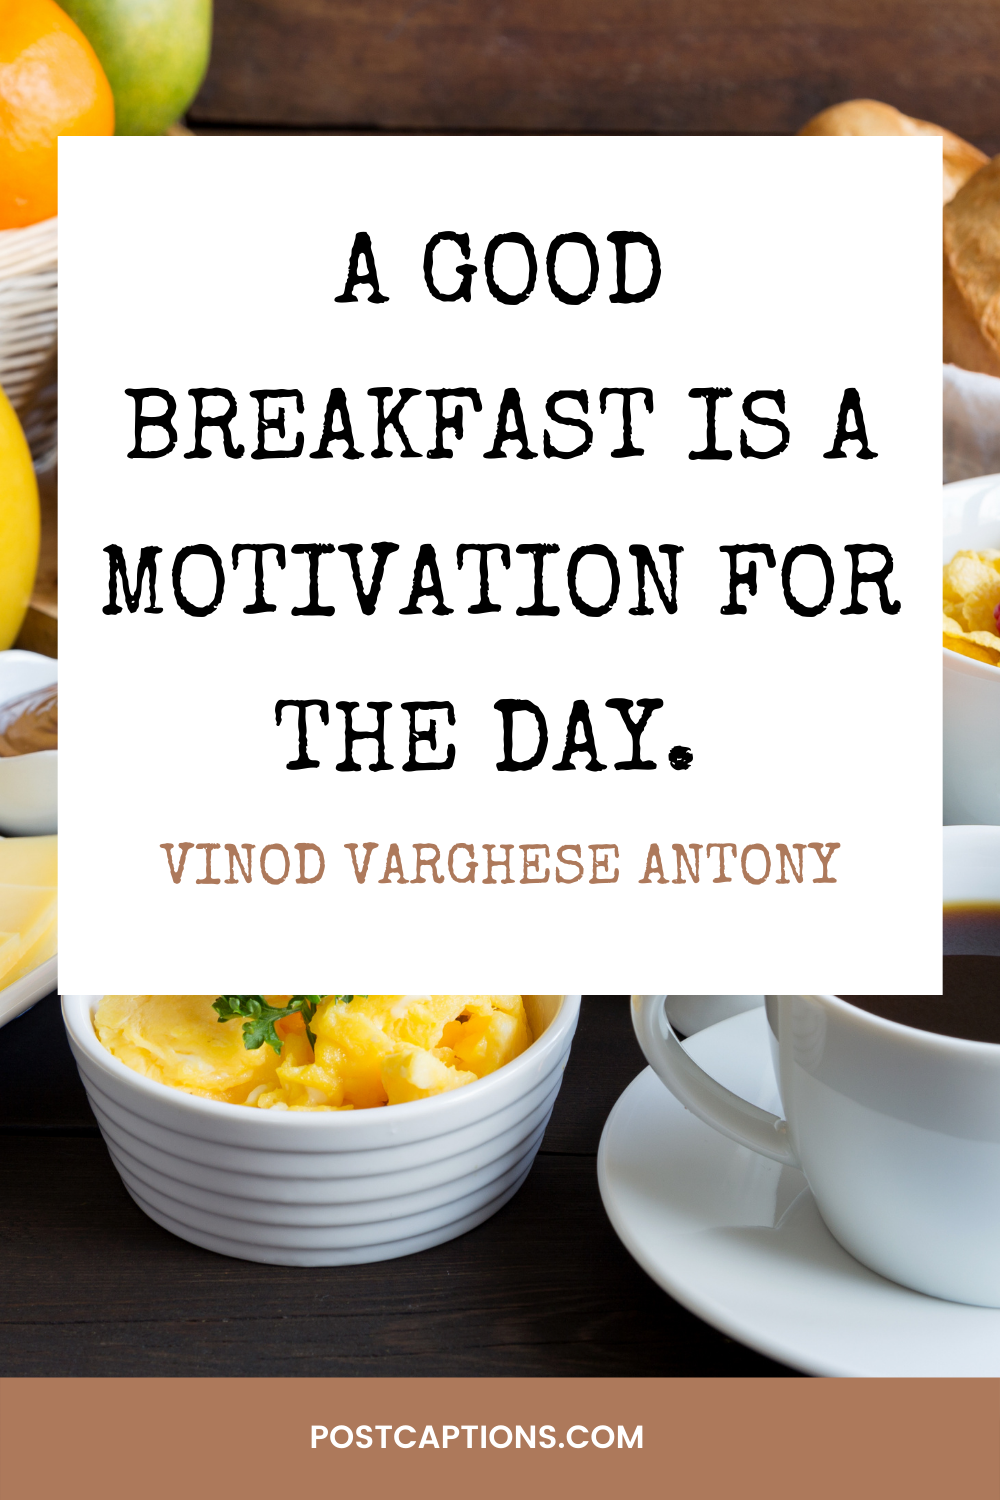 Breakfast quotes for Instagram